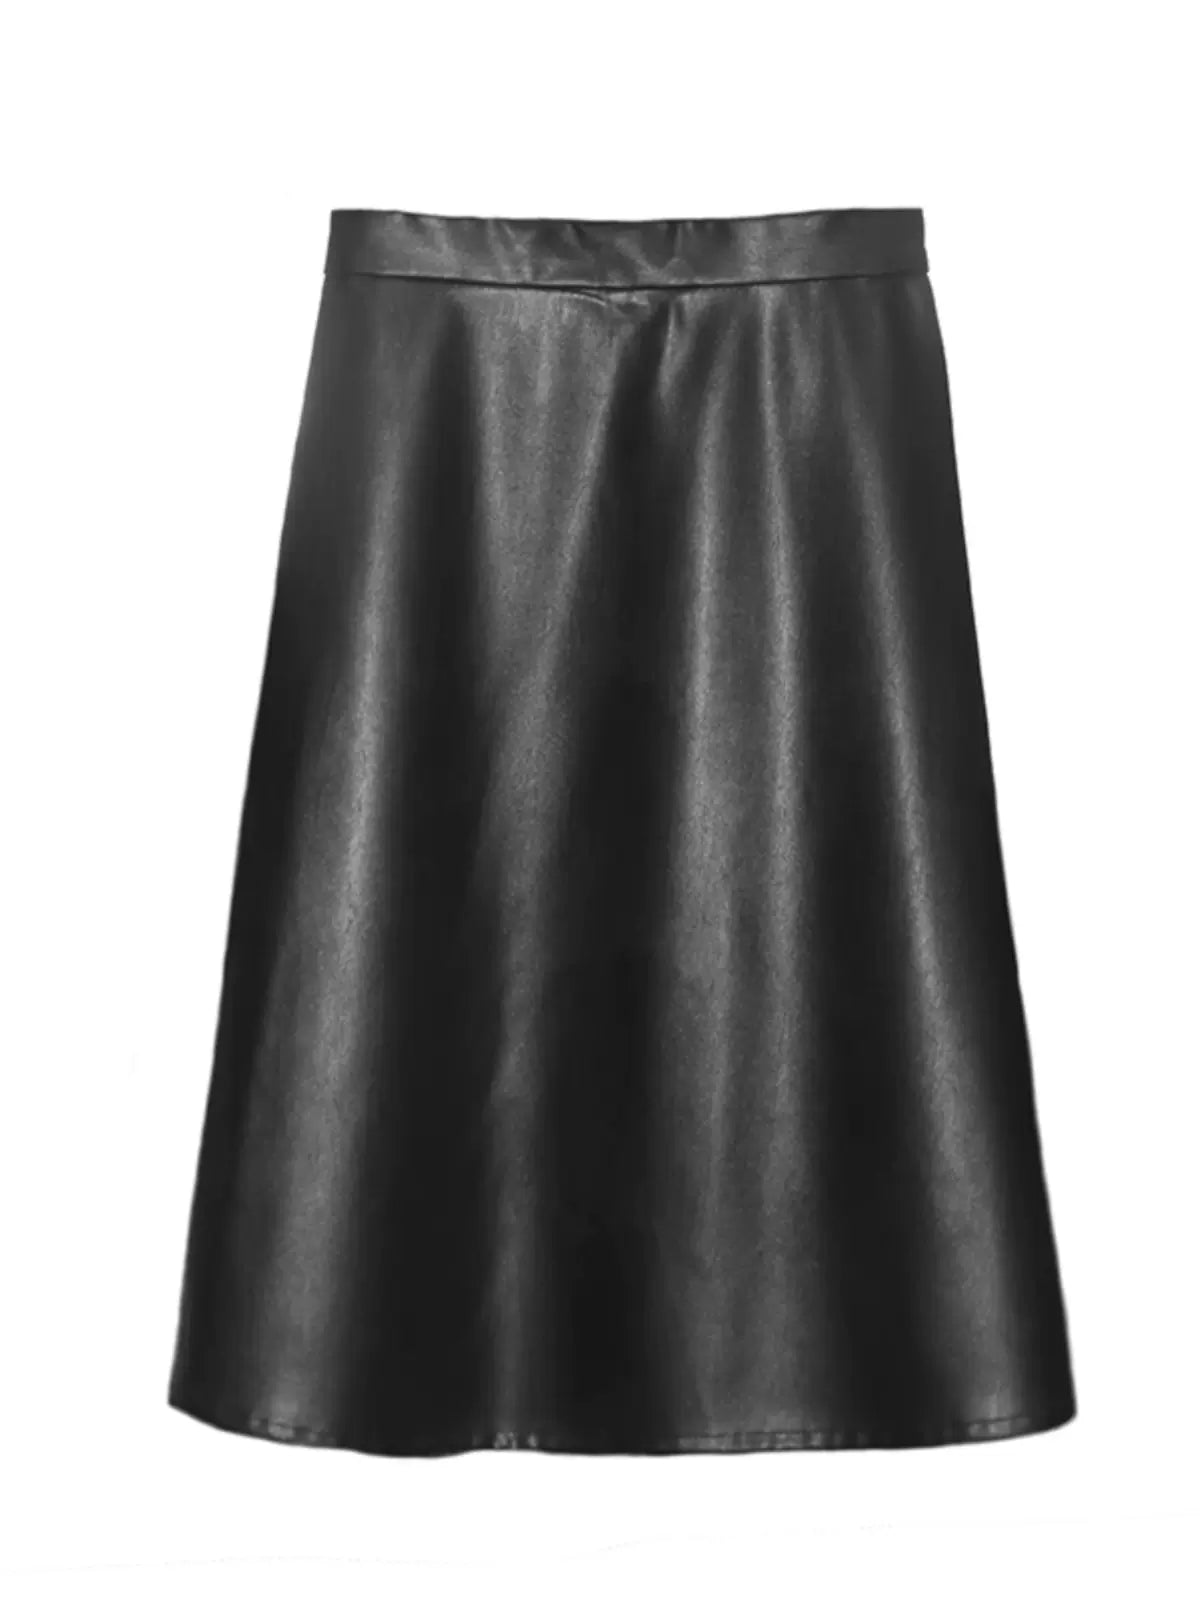 lack PU leather A-line skirt